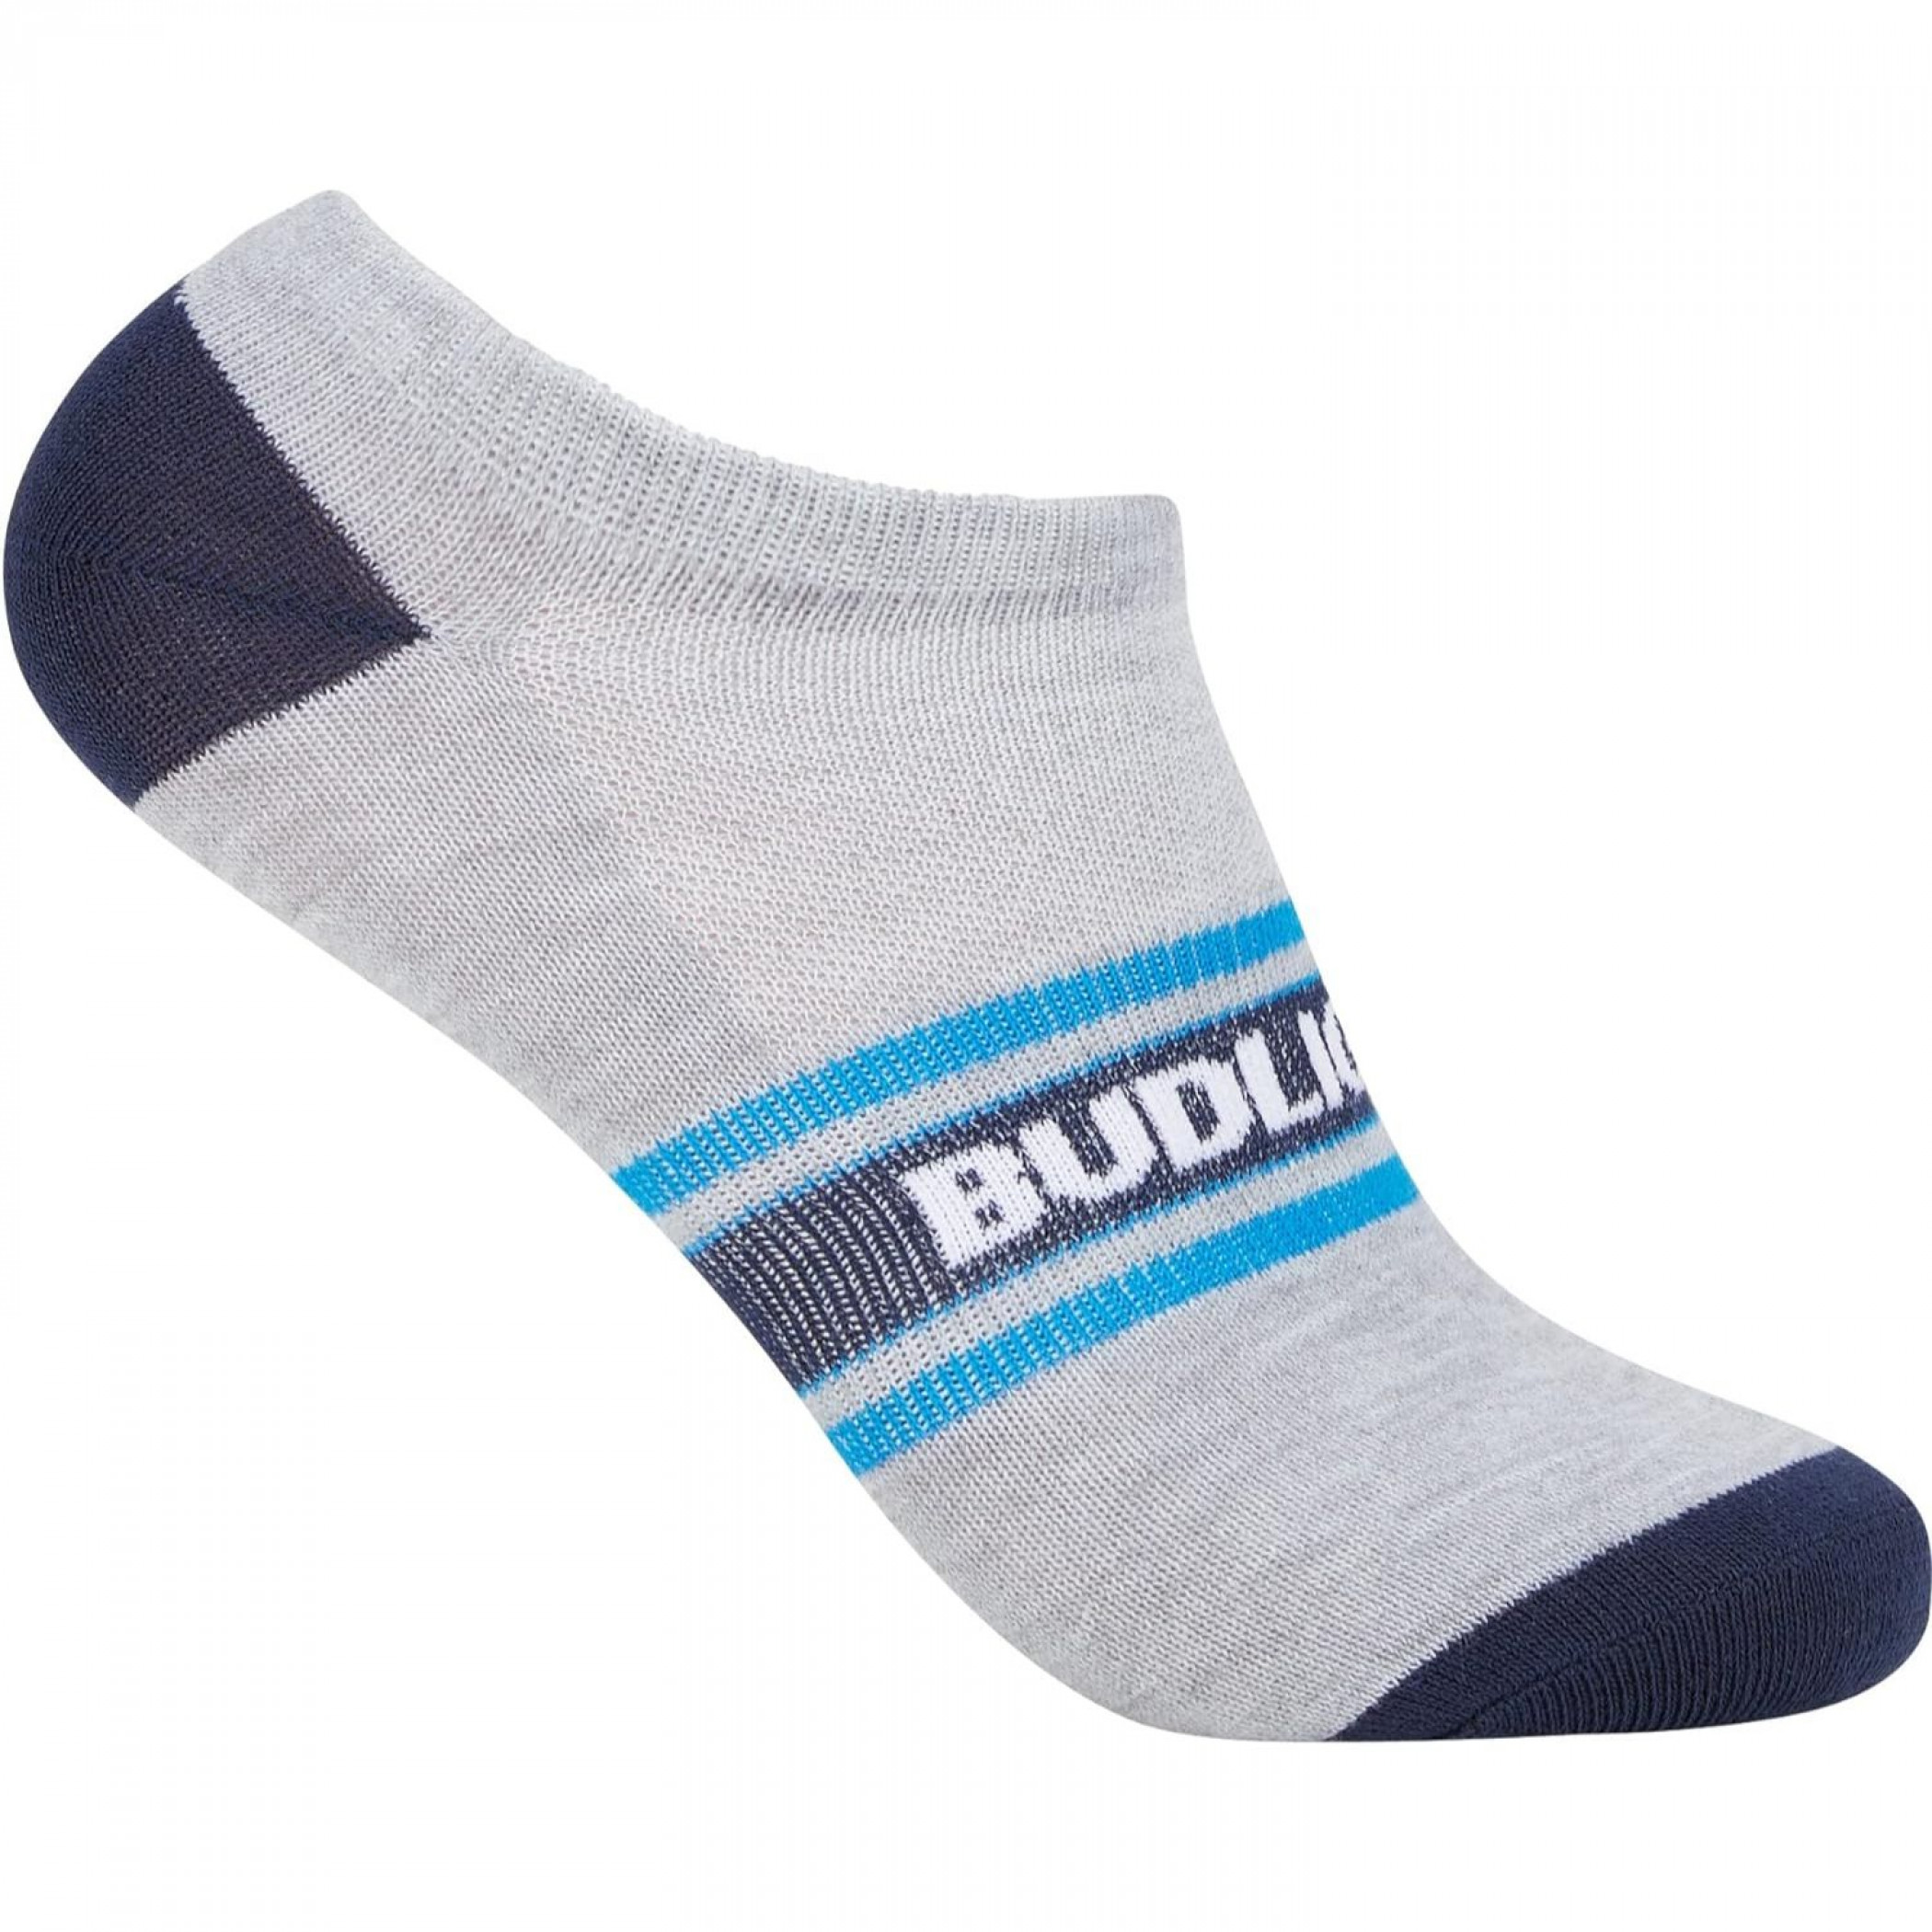 Bud Light Logos Women's Athletic No-Show Socks 6-Pair Multipack